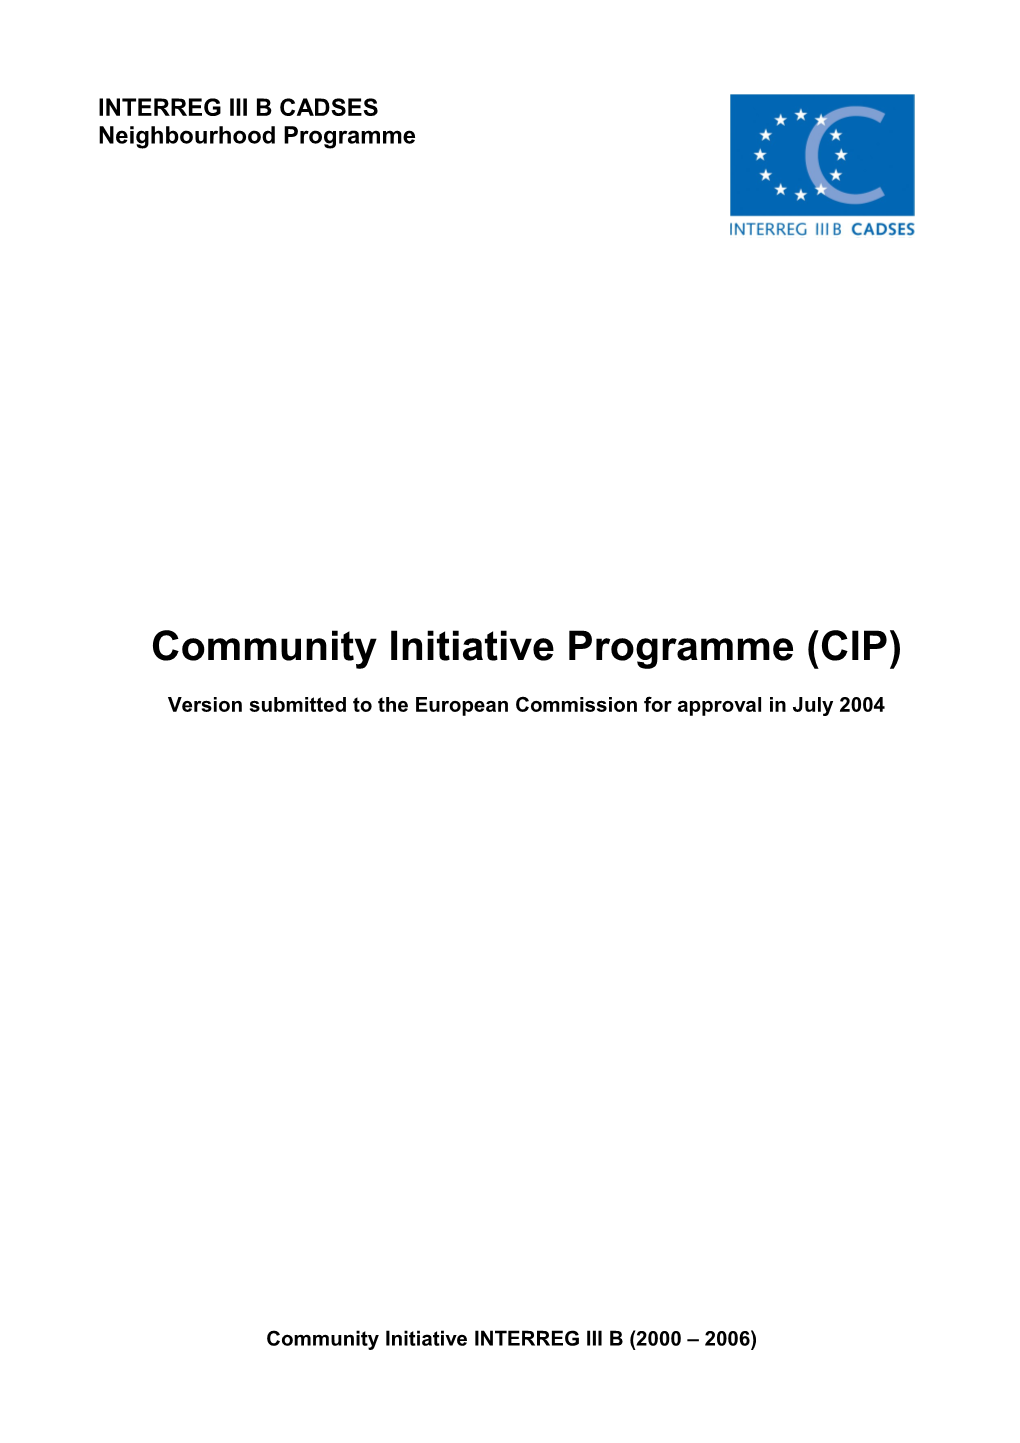 Community Initiative Interreg IIIB (2000 2006)